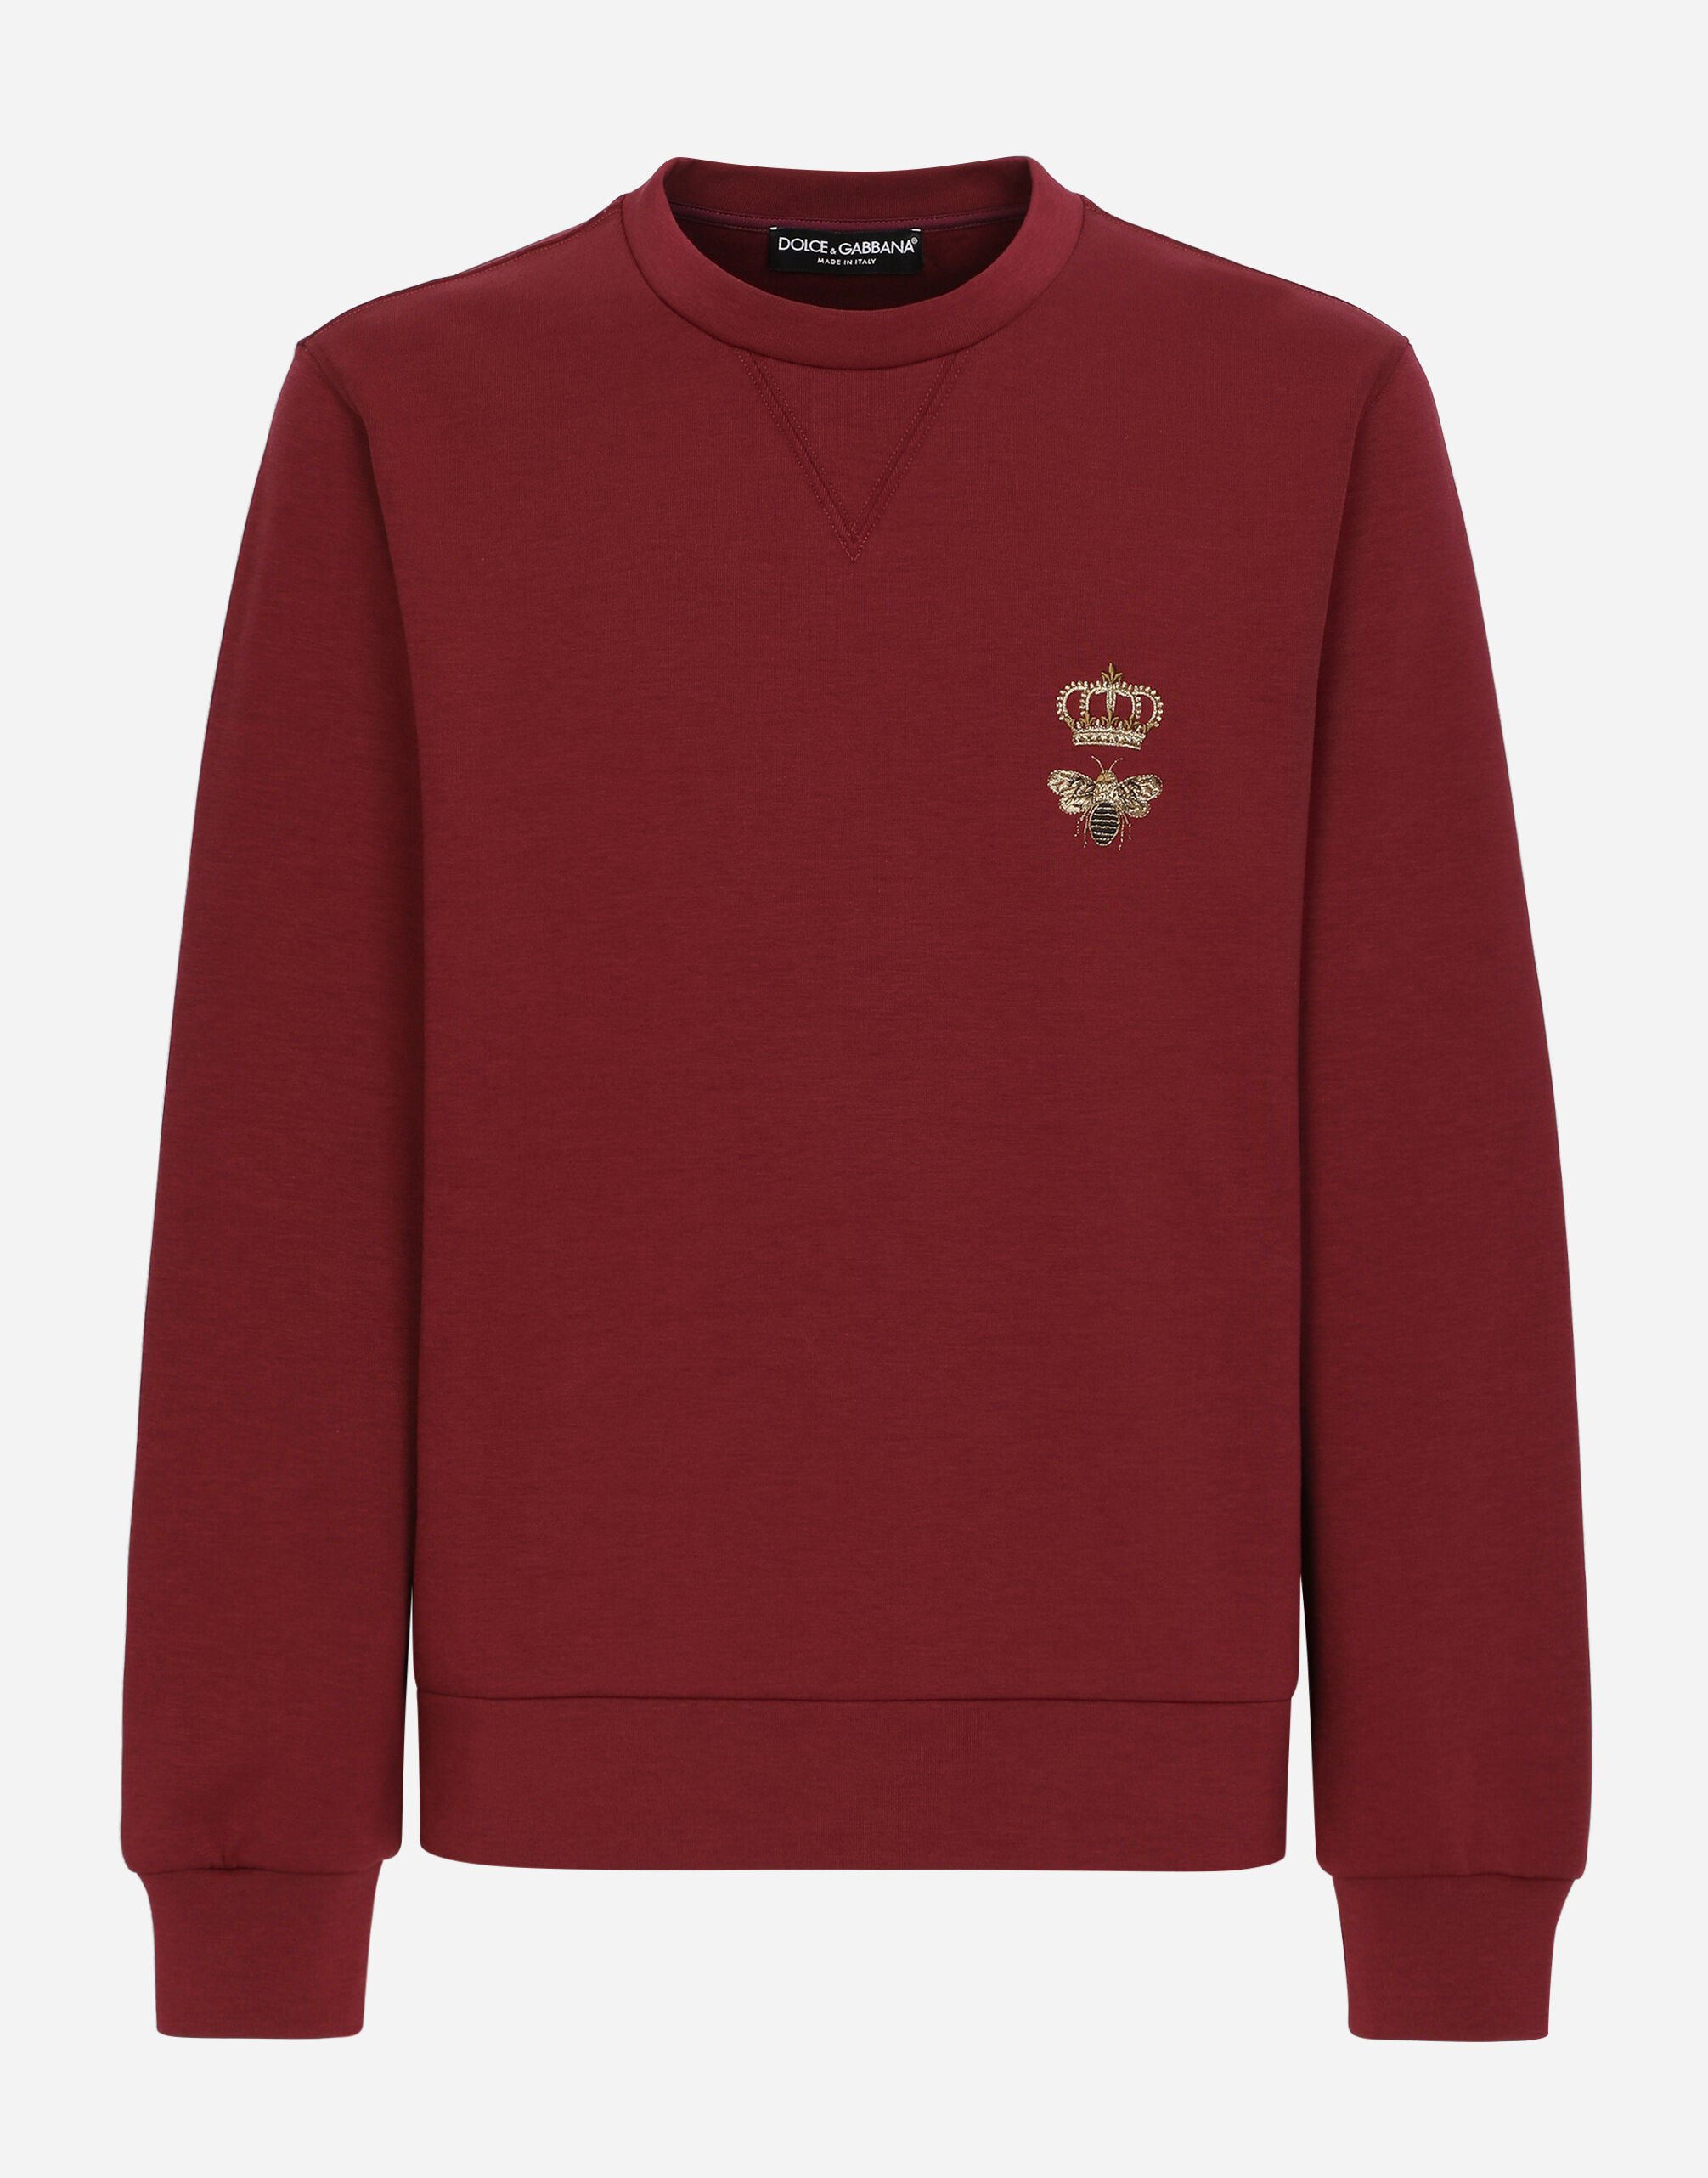 Dolce & Gabbana Cotton jersey sweatshirt with embroidery Print G9AQVTHI7X6